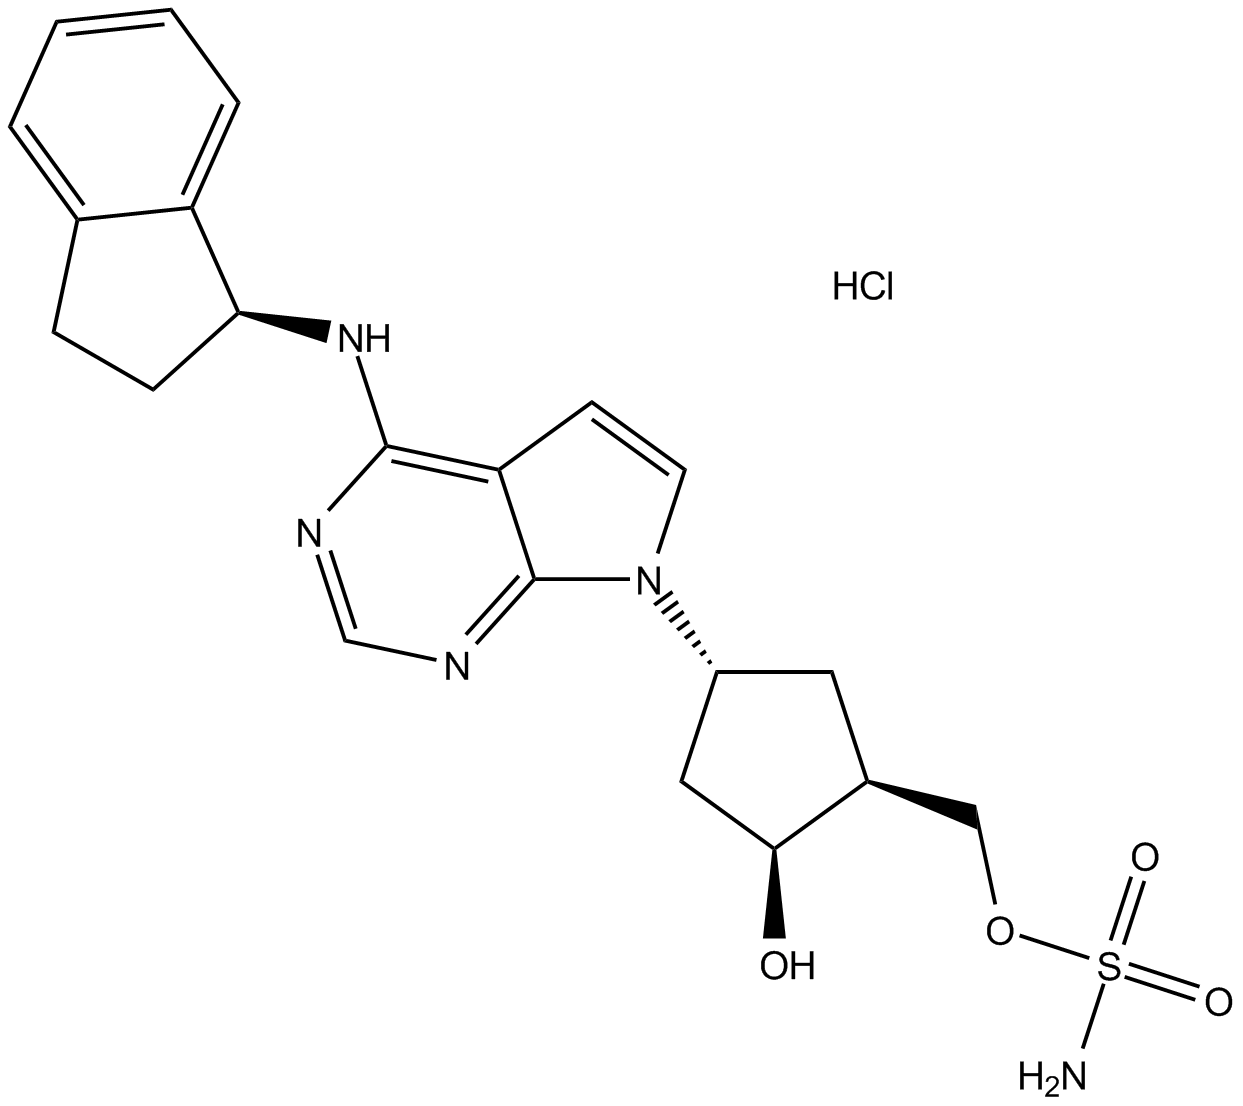 MLN4924 HCl salt التركيب الكيميائي